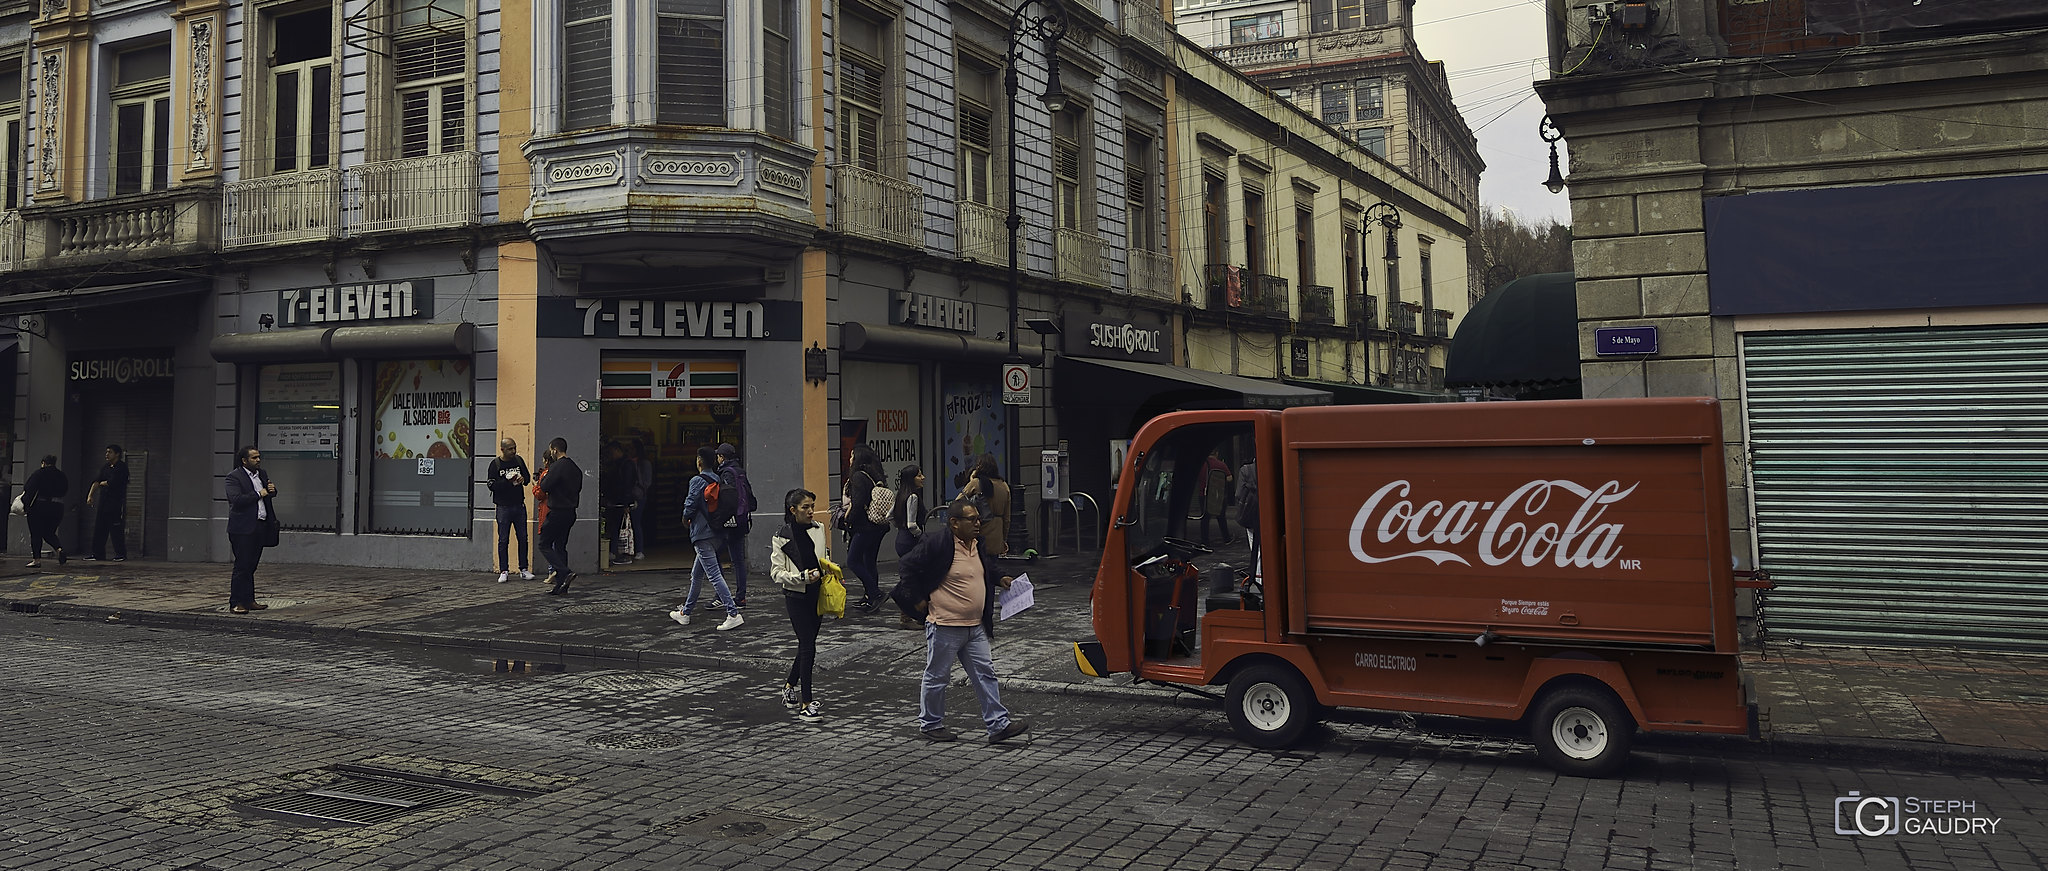 Coca Cola @ Mexico [Klik om de diavoorstelling te starten]